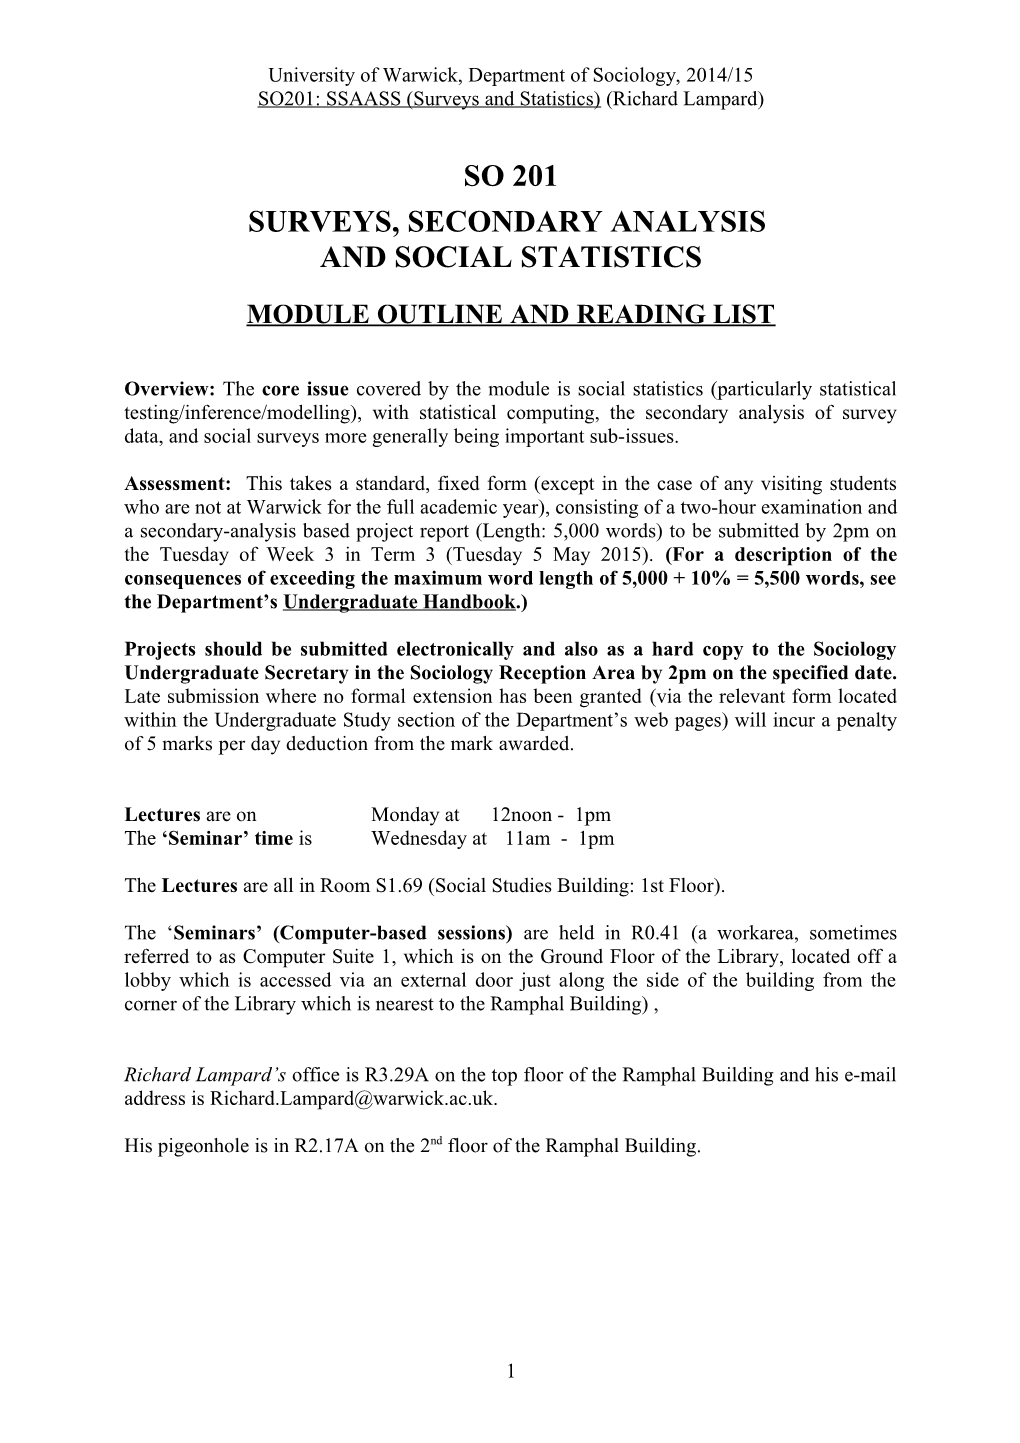 SO 201: Surveys, Secondary Analysis and Social Statistics